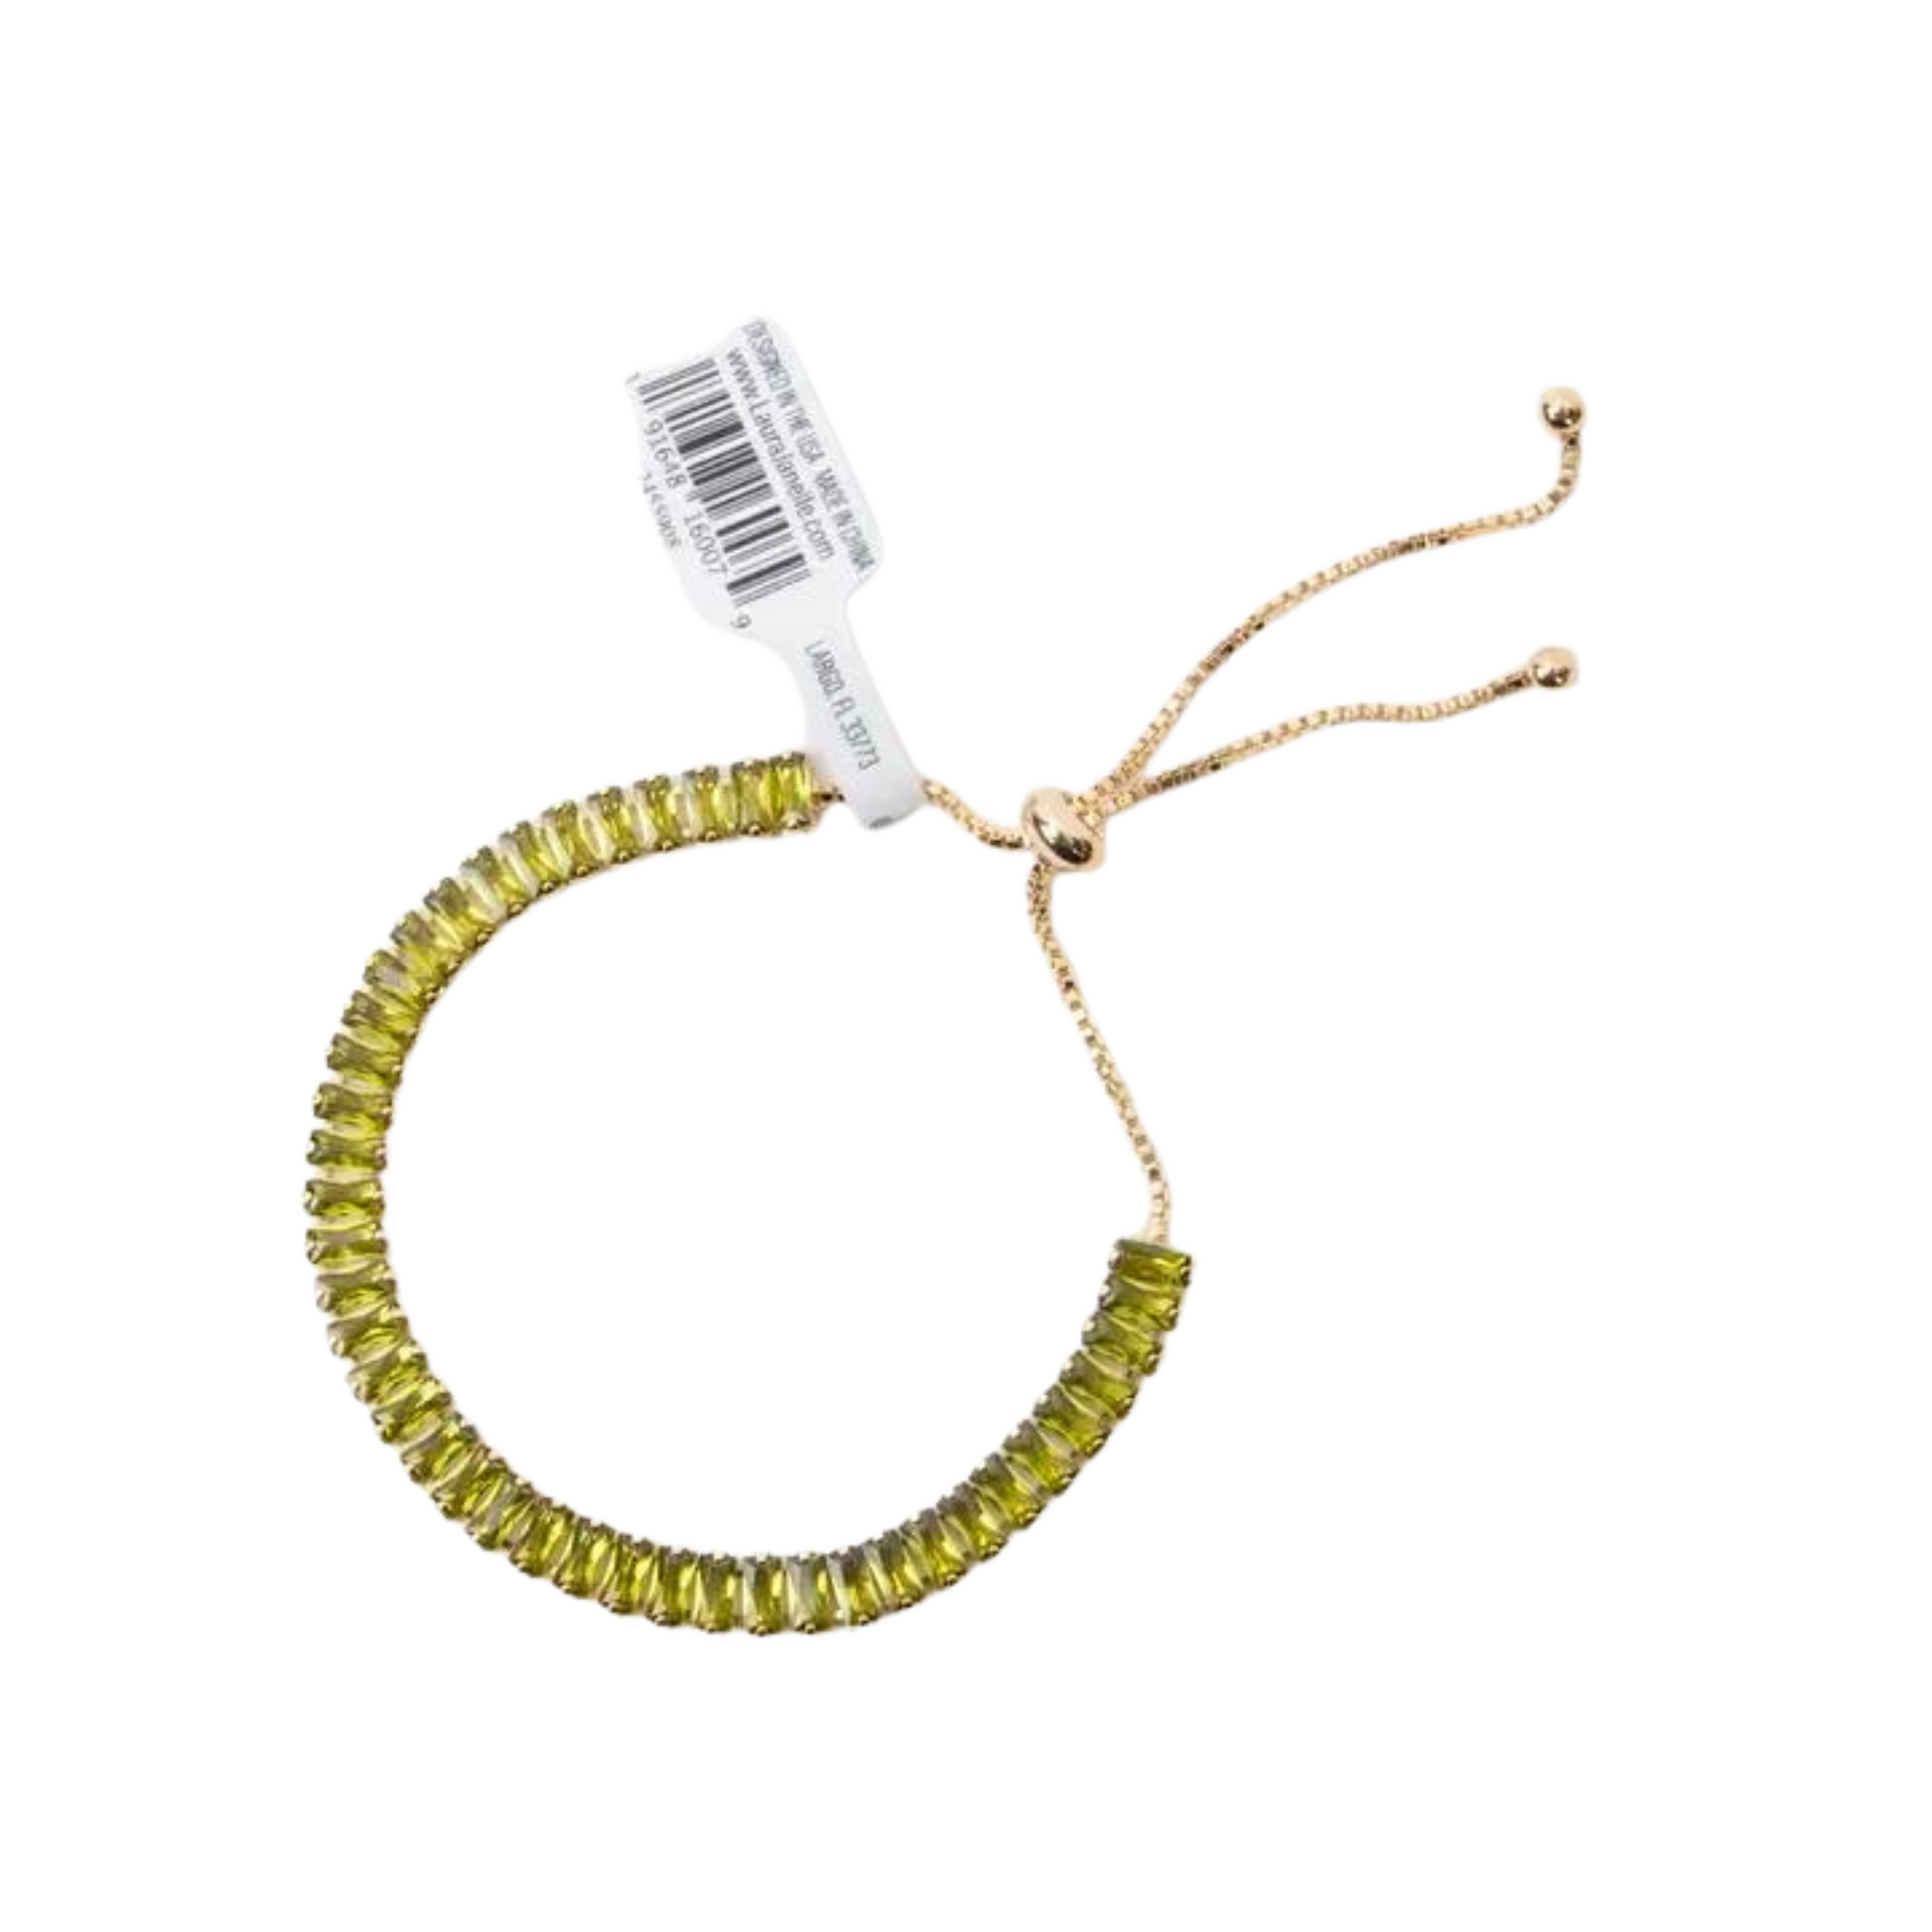 14K gold plated adjustable tennis bracelet in peridot